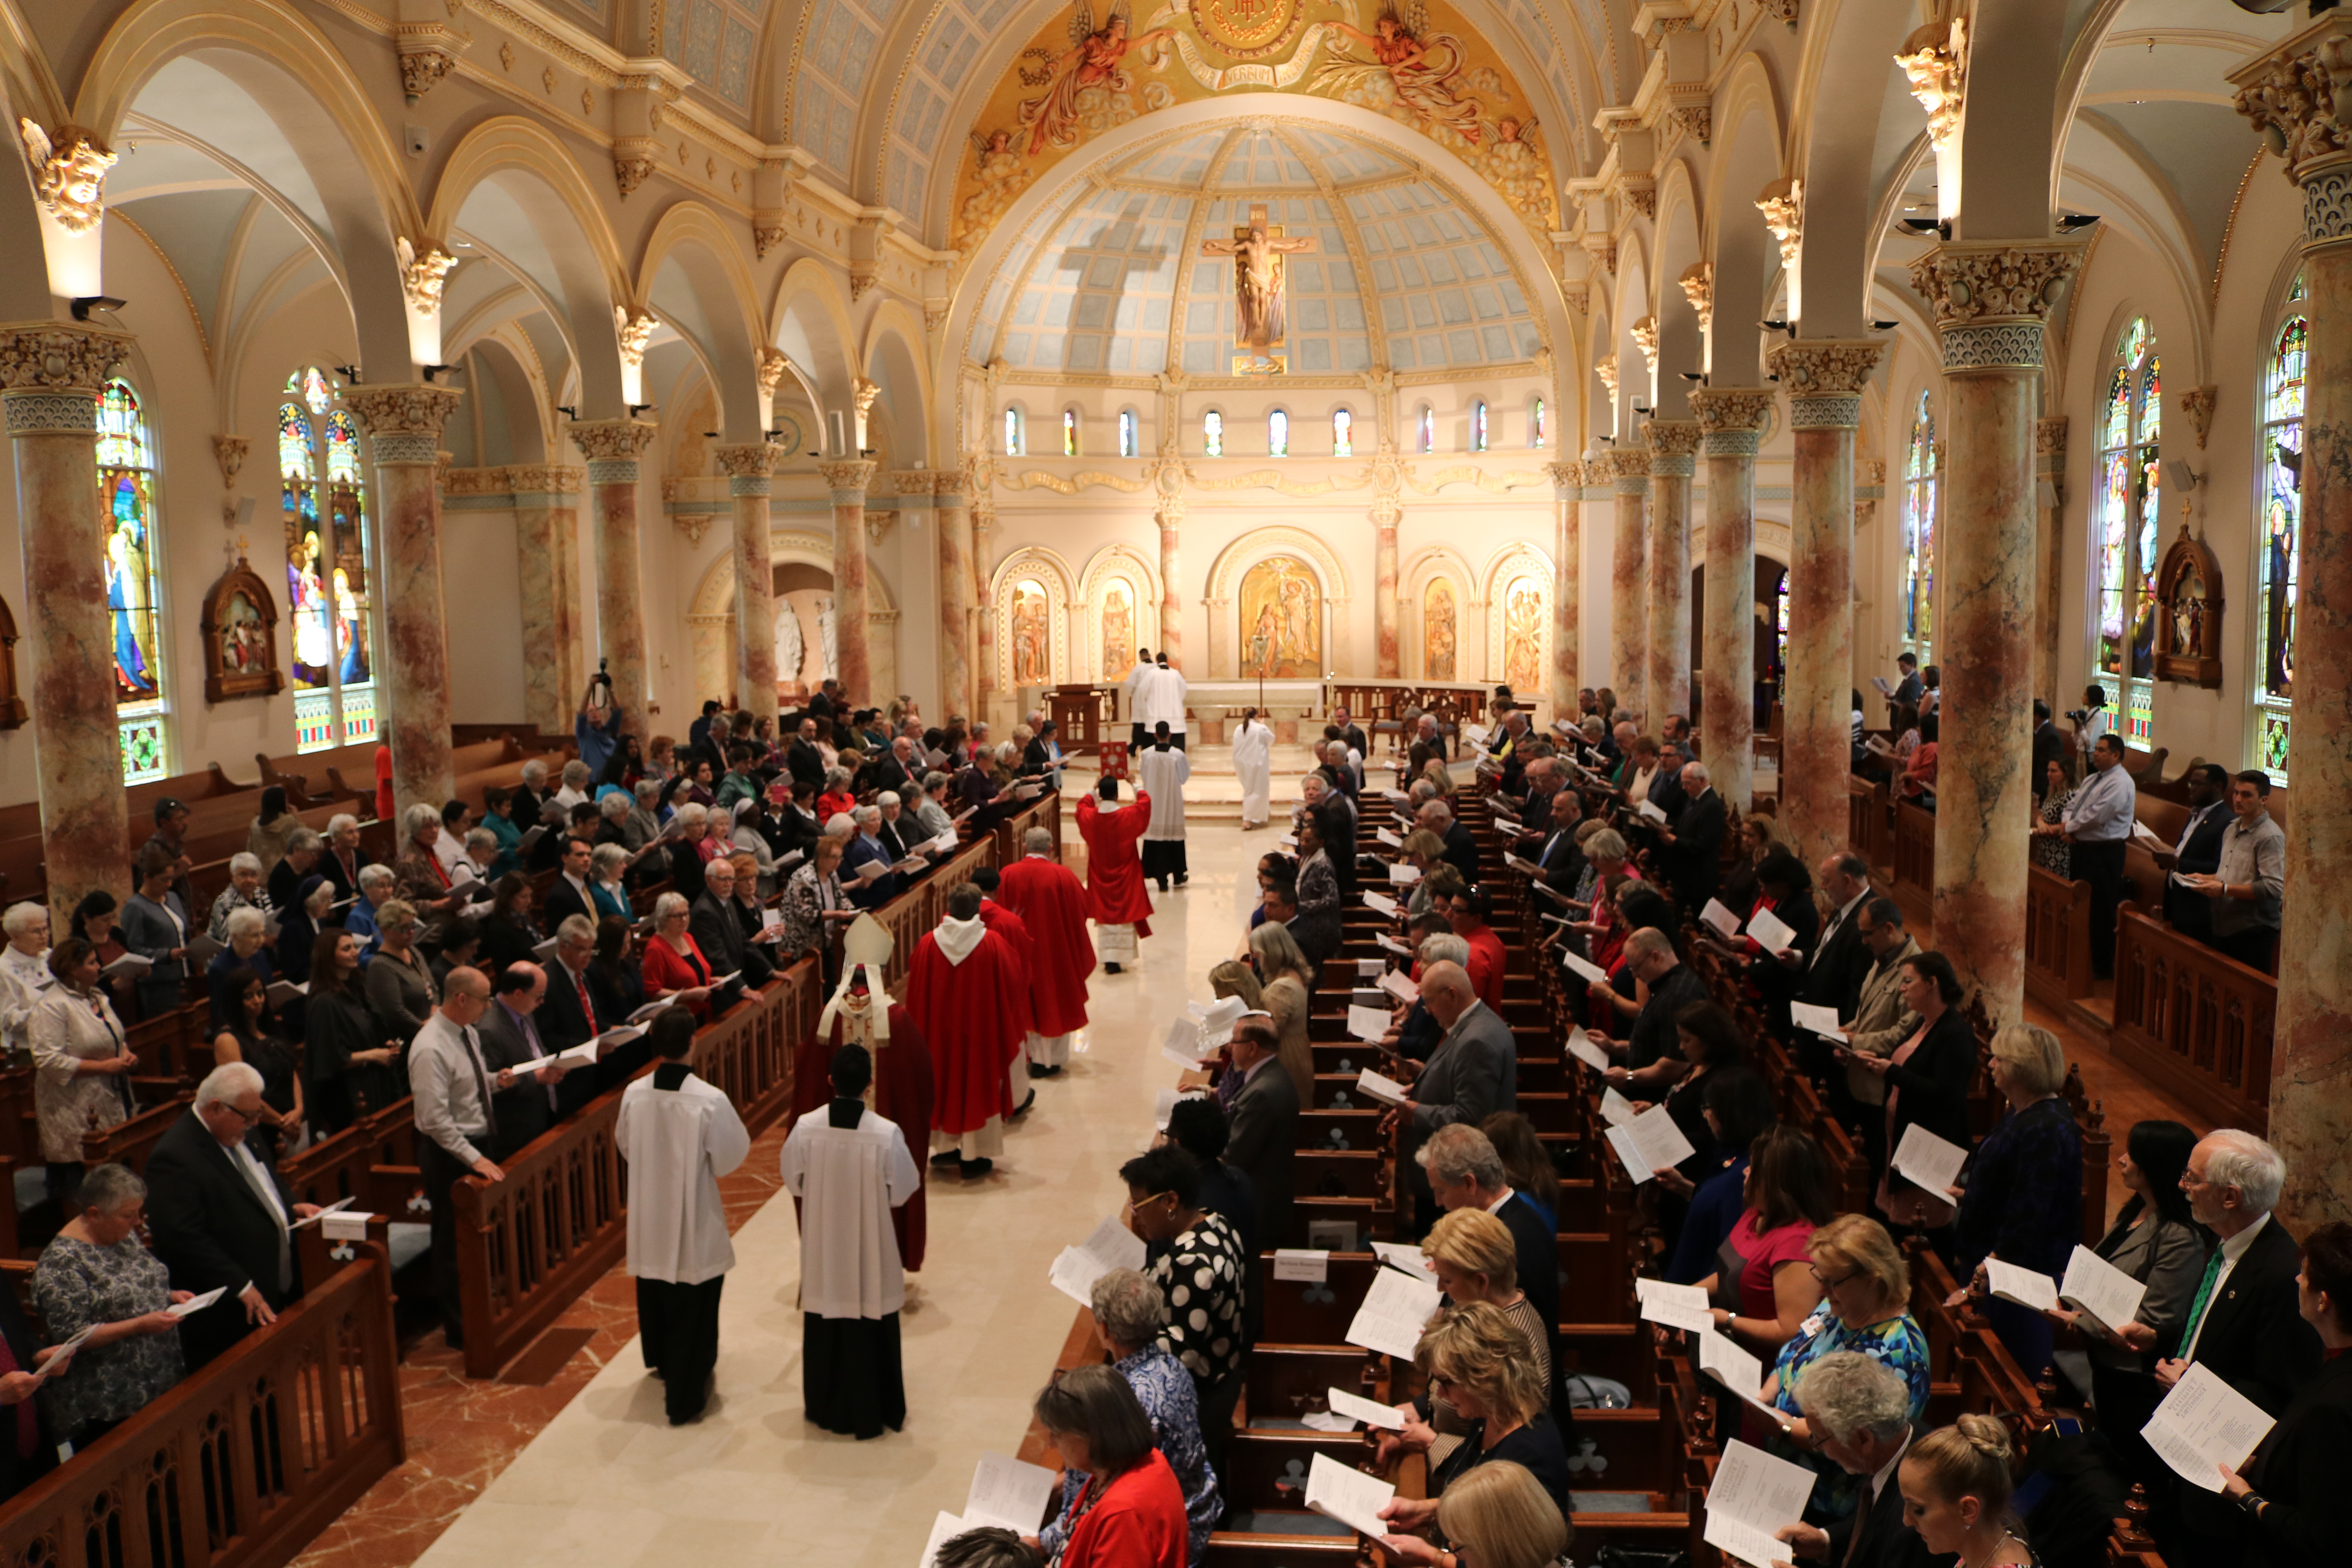 liturgy procession